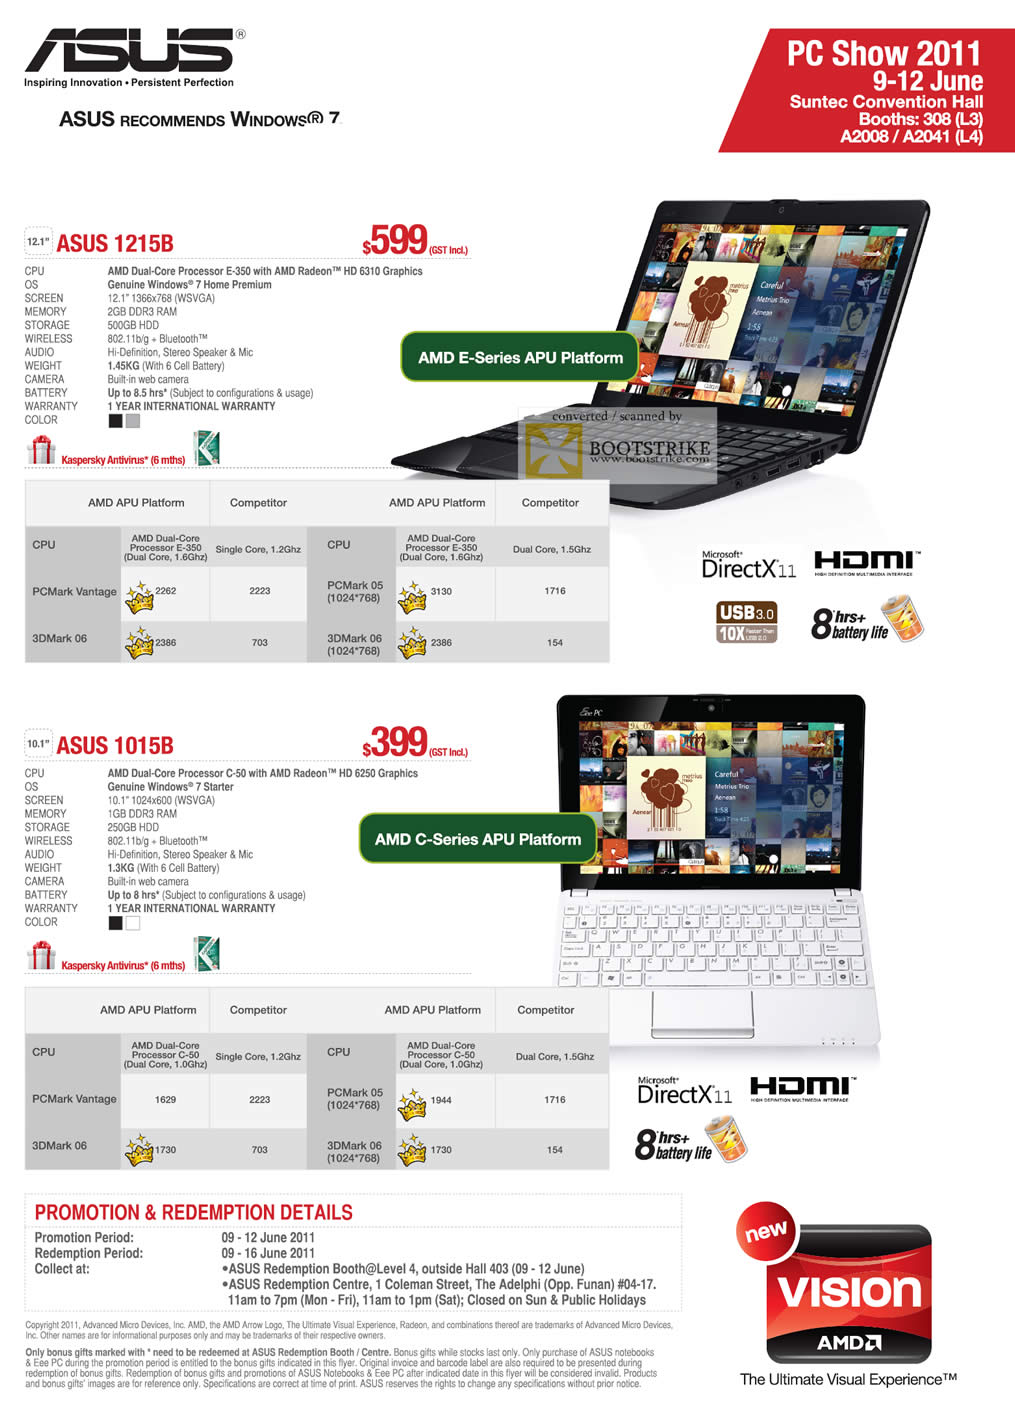 PC Show 2011 price list image brochure of ASUS Newstead Notebooks 1215B 1015B AMD